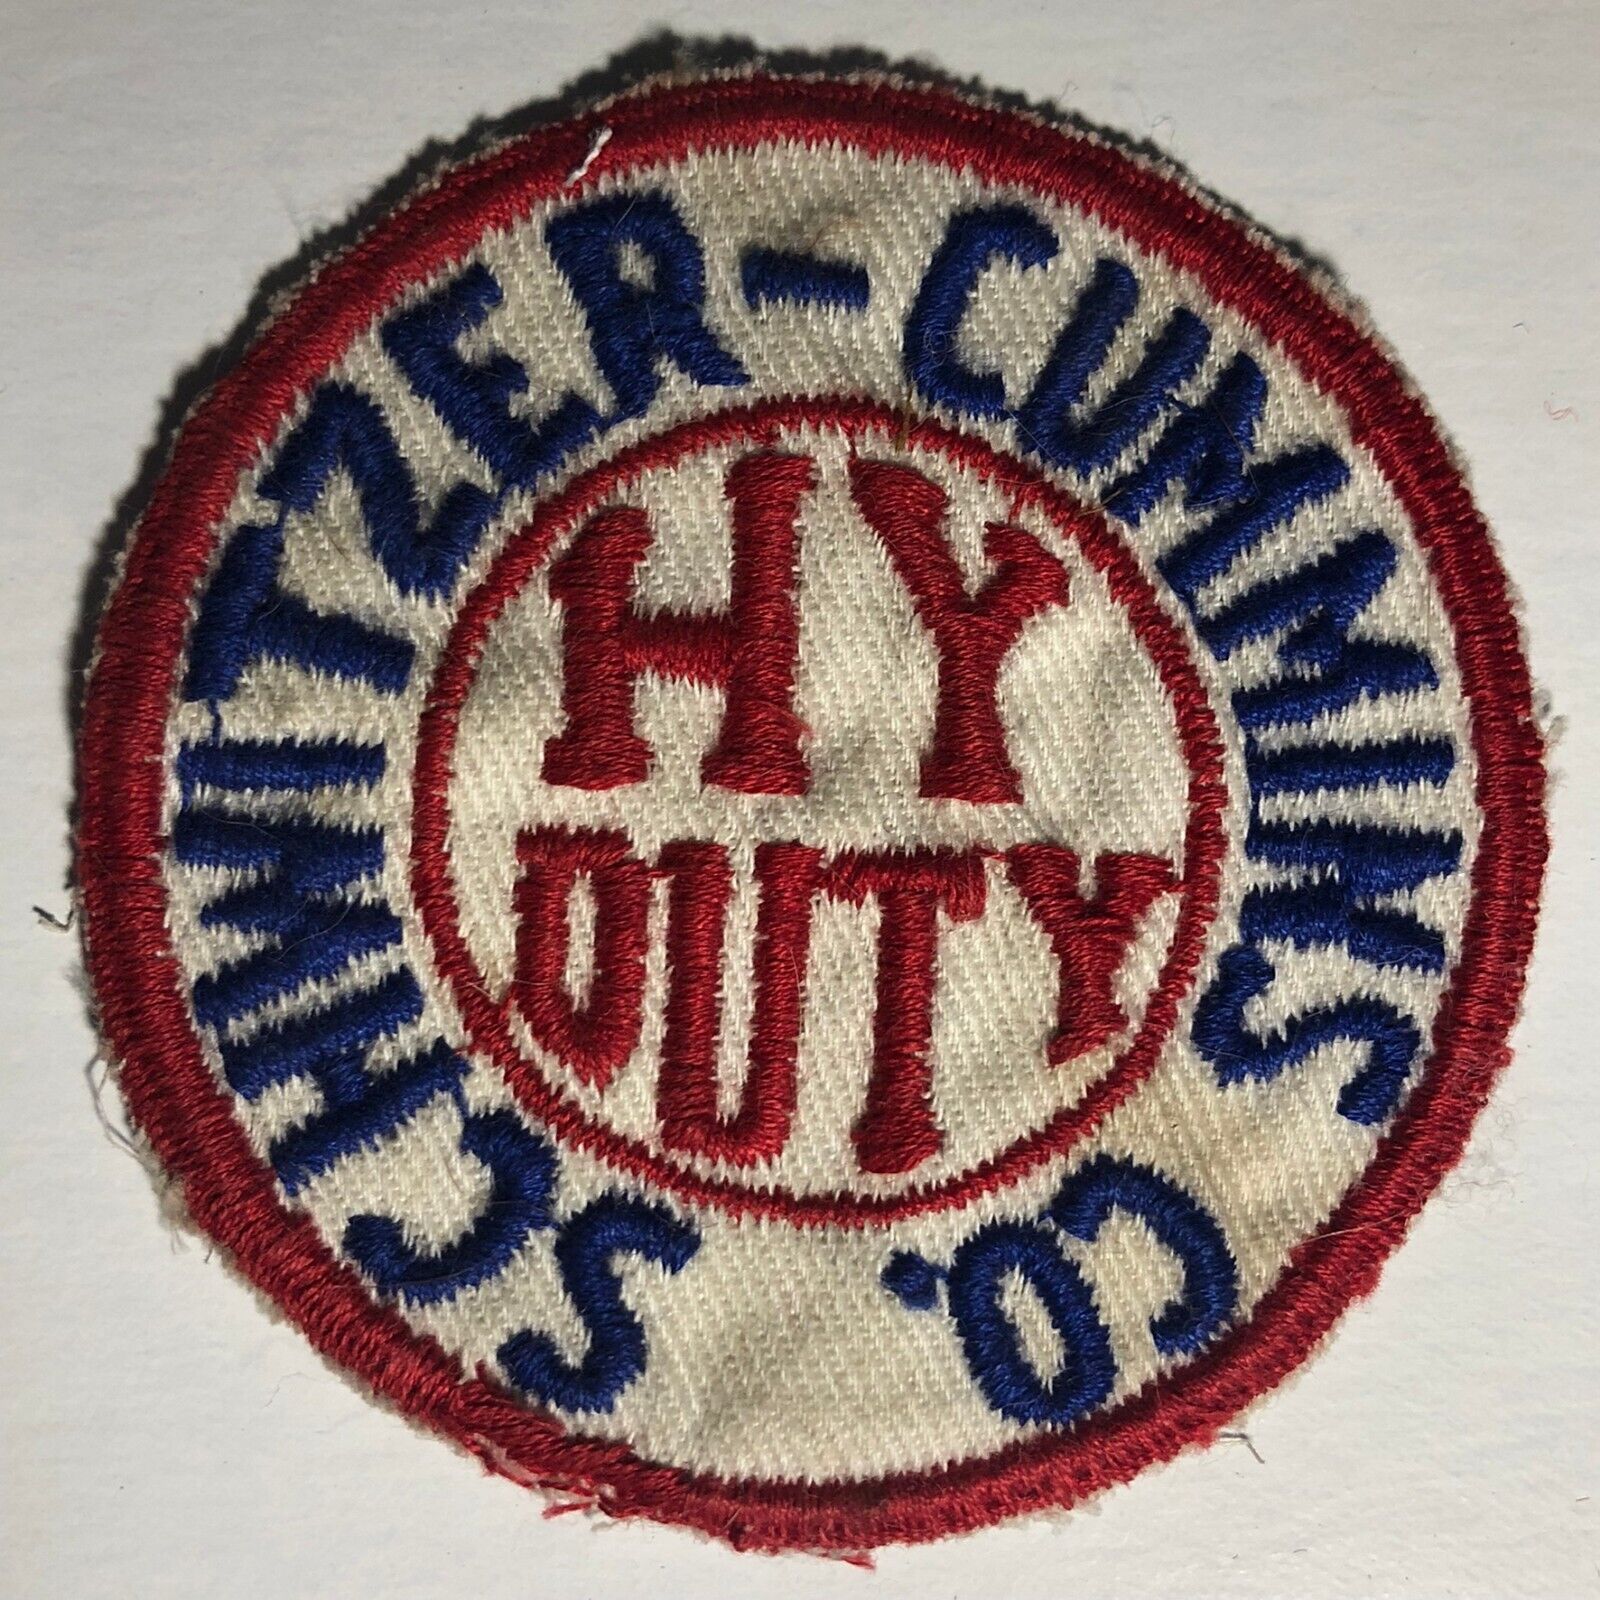 Schwitzer - Cummins HY Duty (Fans Motors ? Indianapolis ?) Embr. Patch c1950\'s